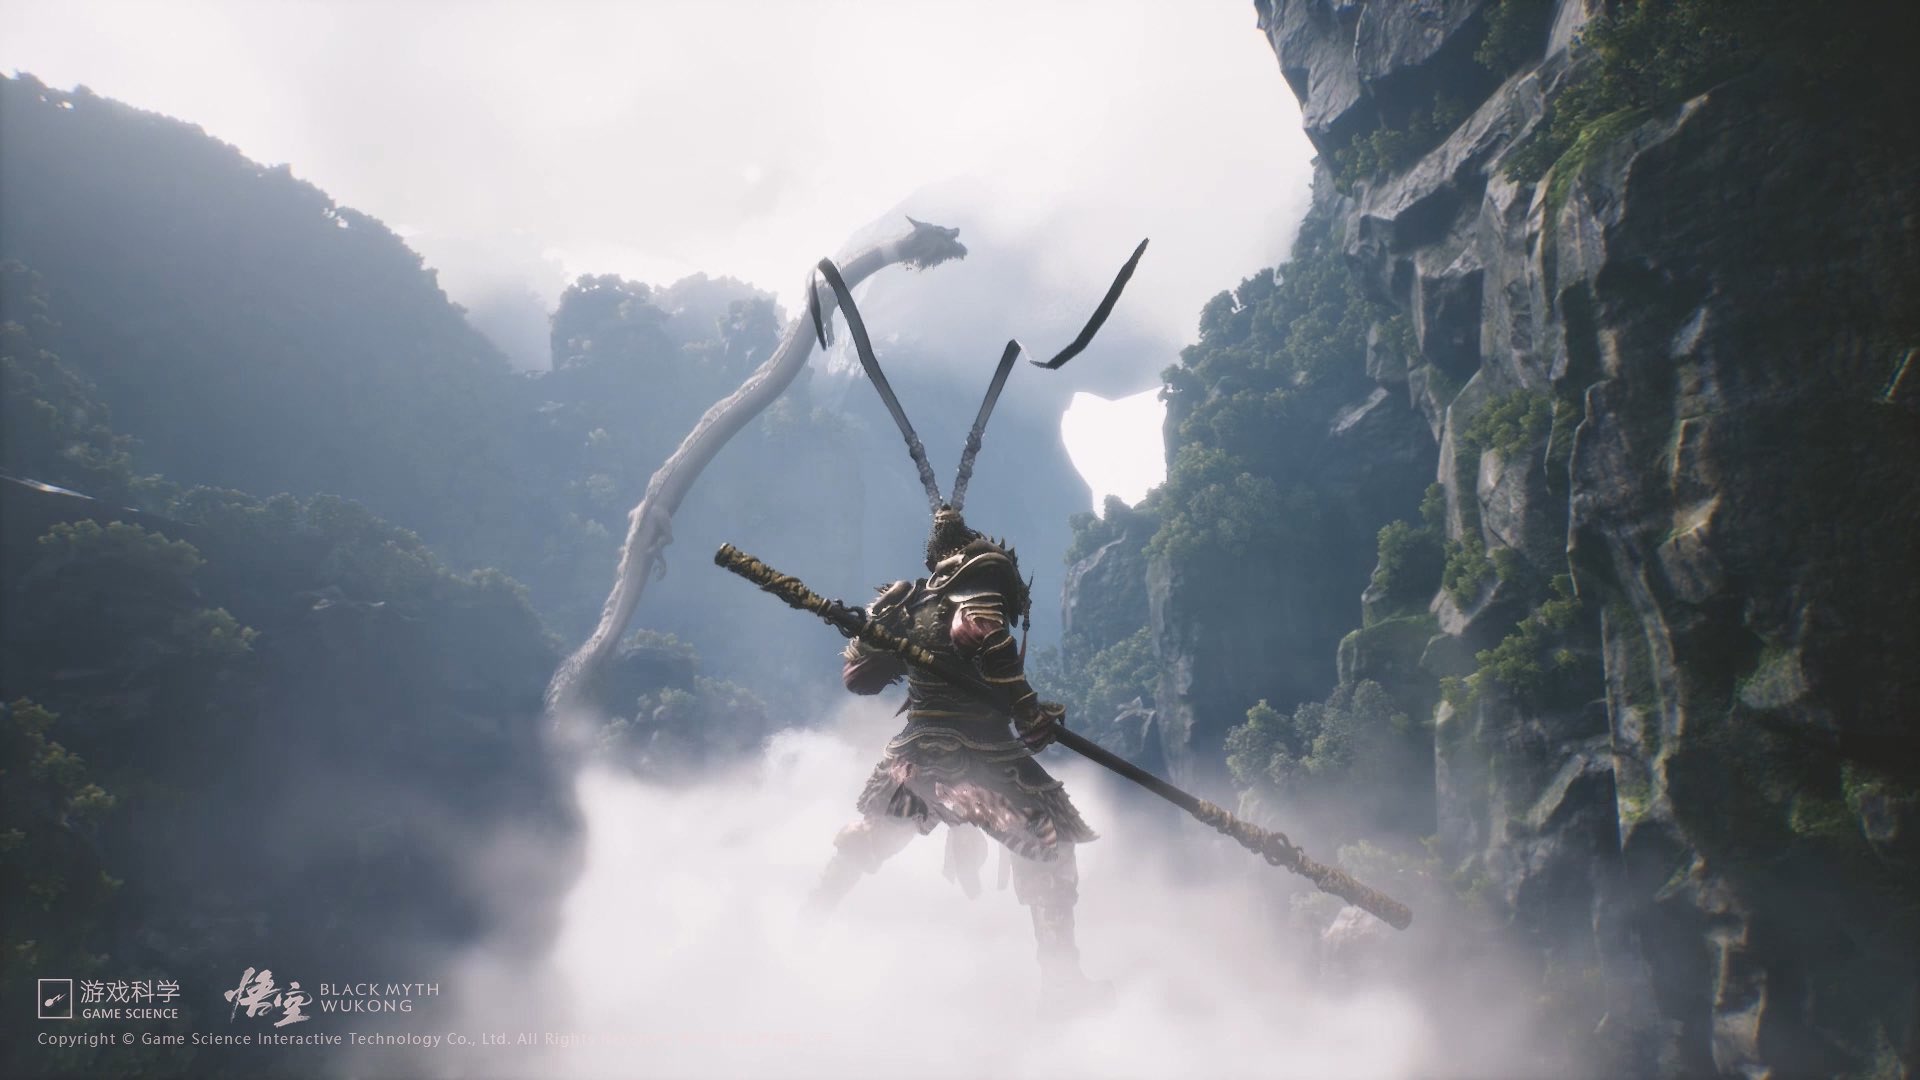 Screenshot from Black Myth: Wukong showing a legendary serpent foe